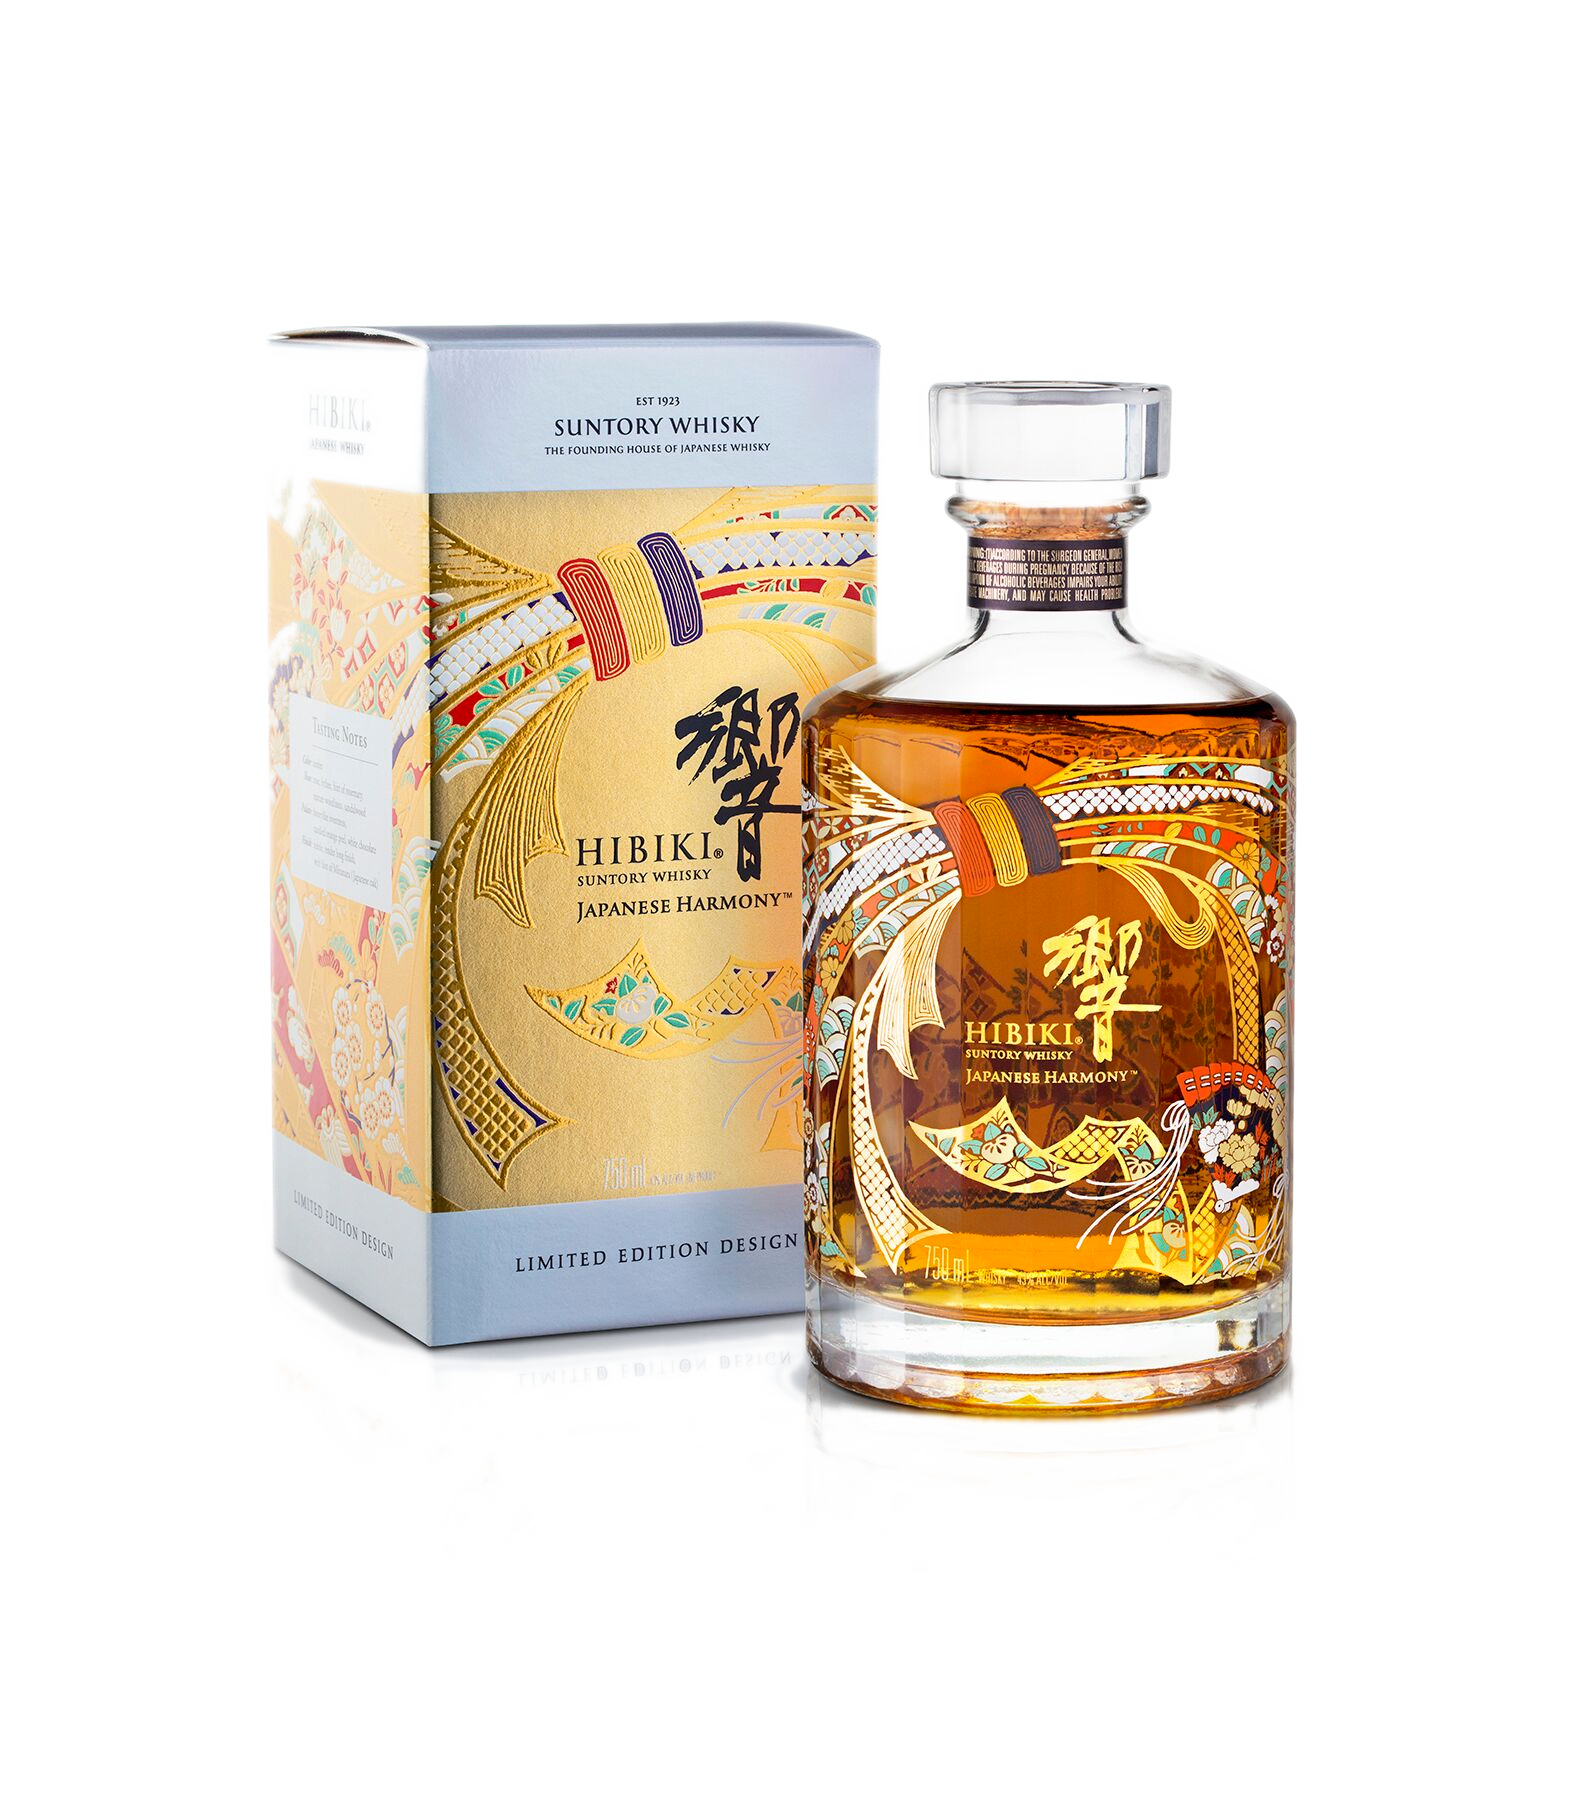 Hibiki Japanese Harmony' 30th Anniversary Limited Edition Design Blended Whisky